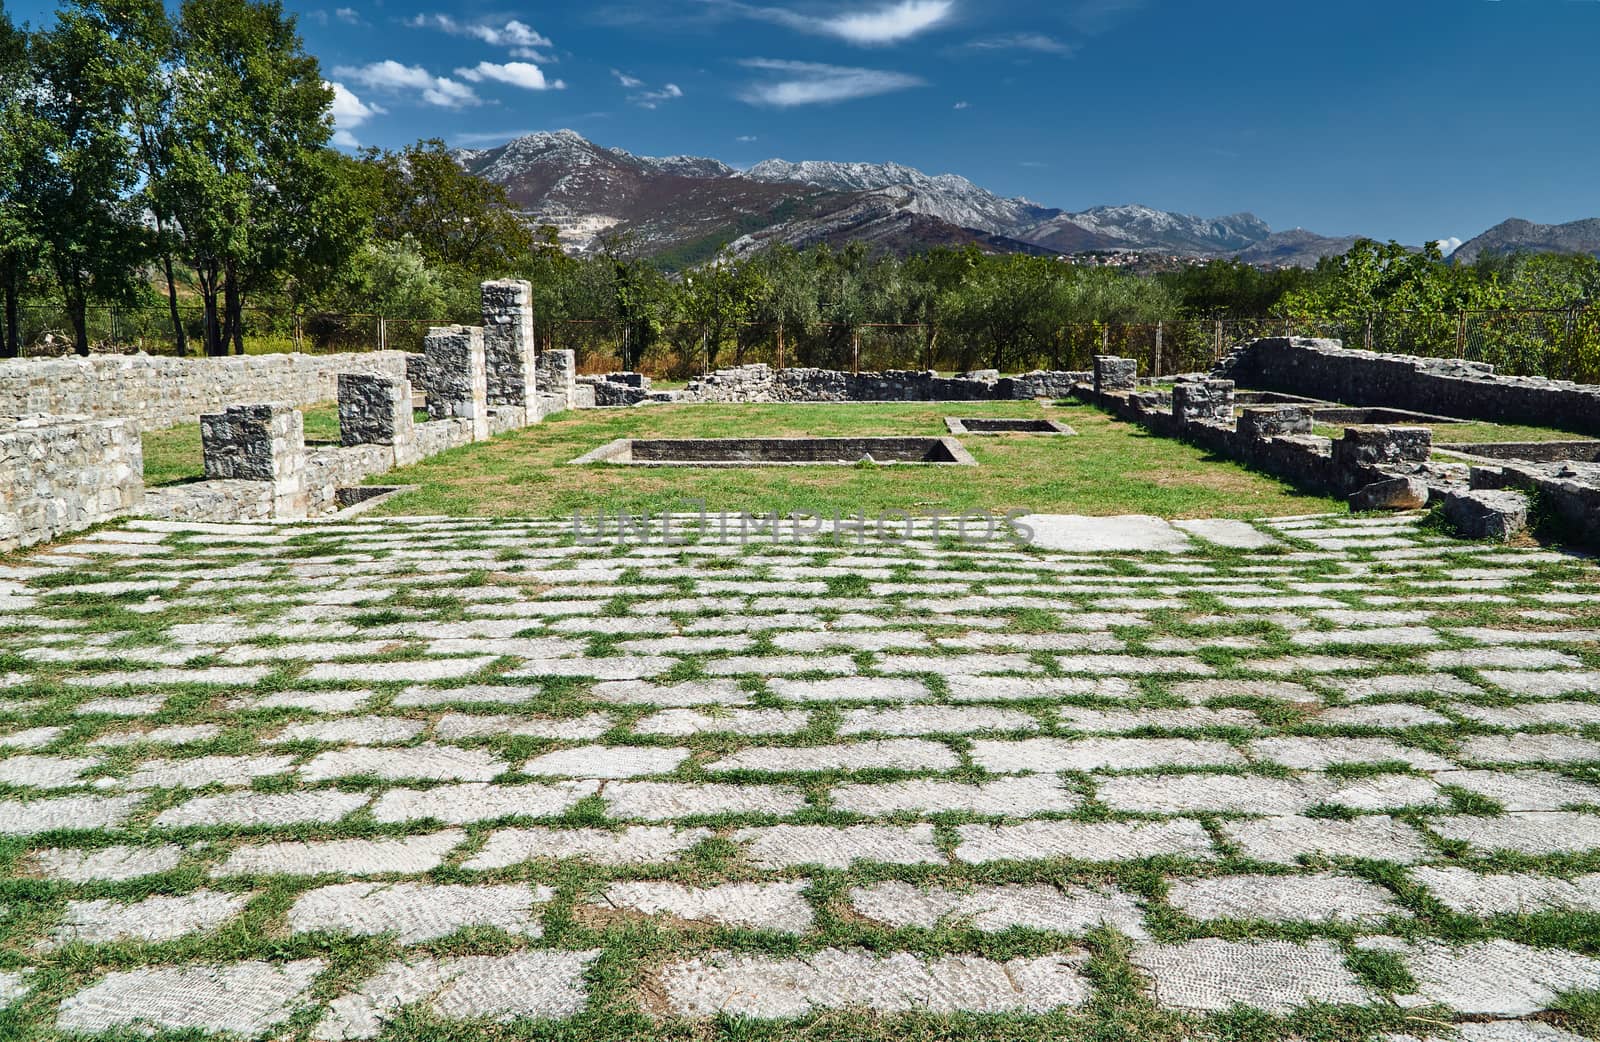 Stone ruins of the Roman city of Salona in Croatia